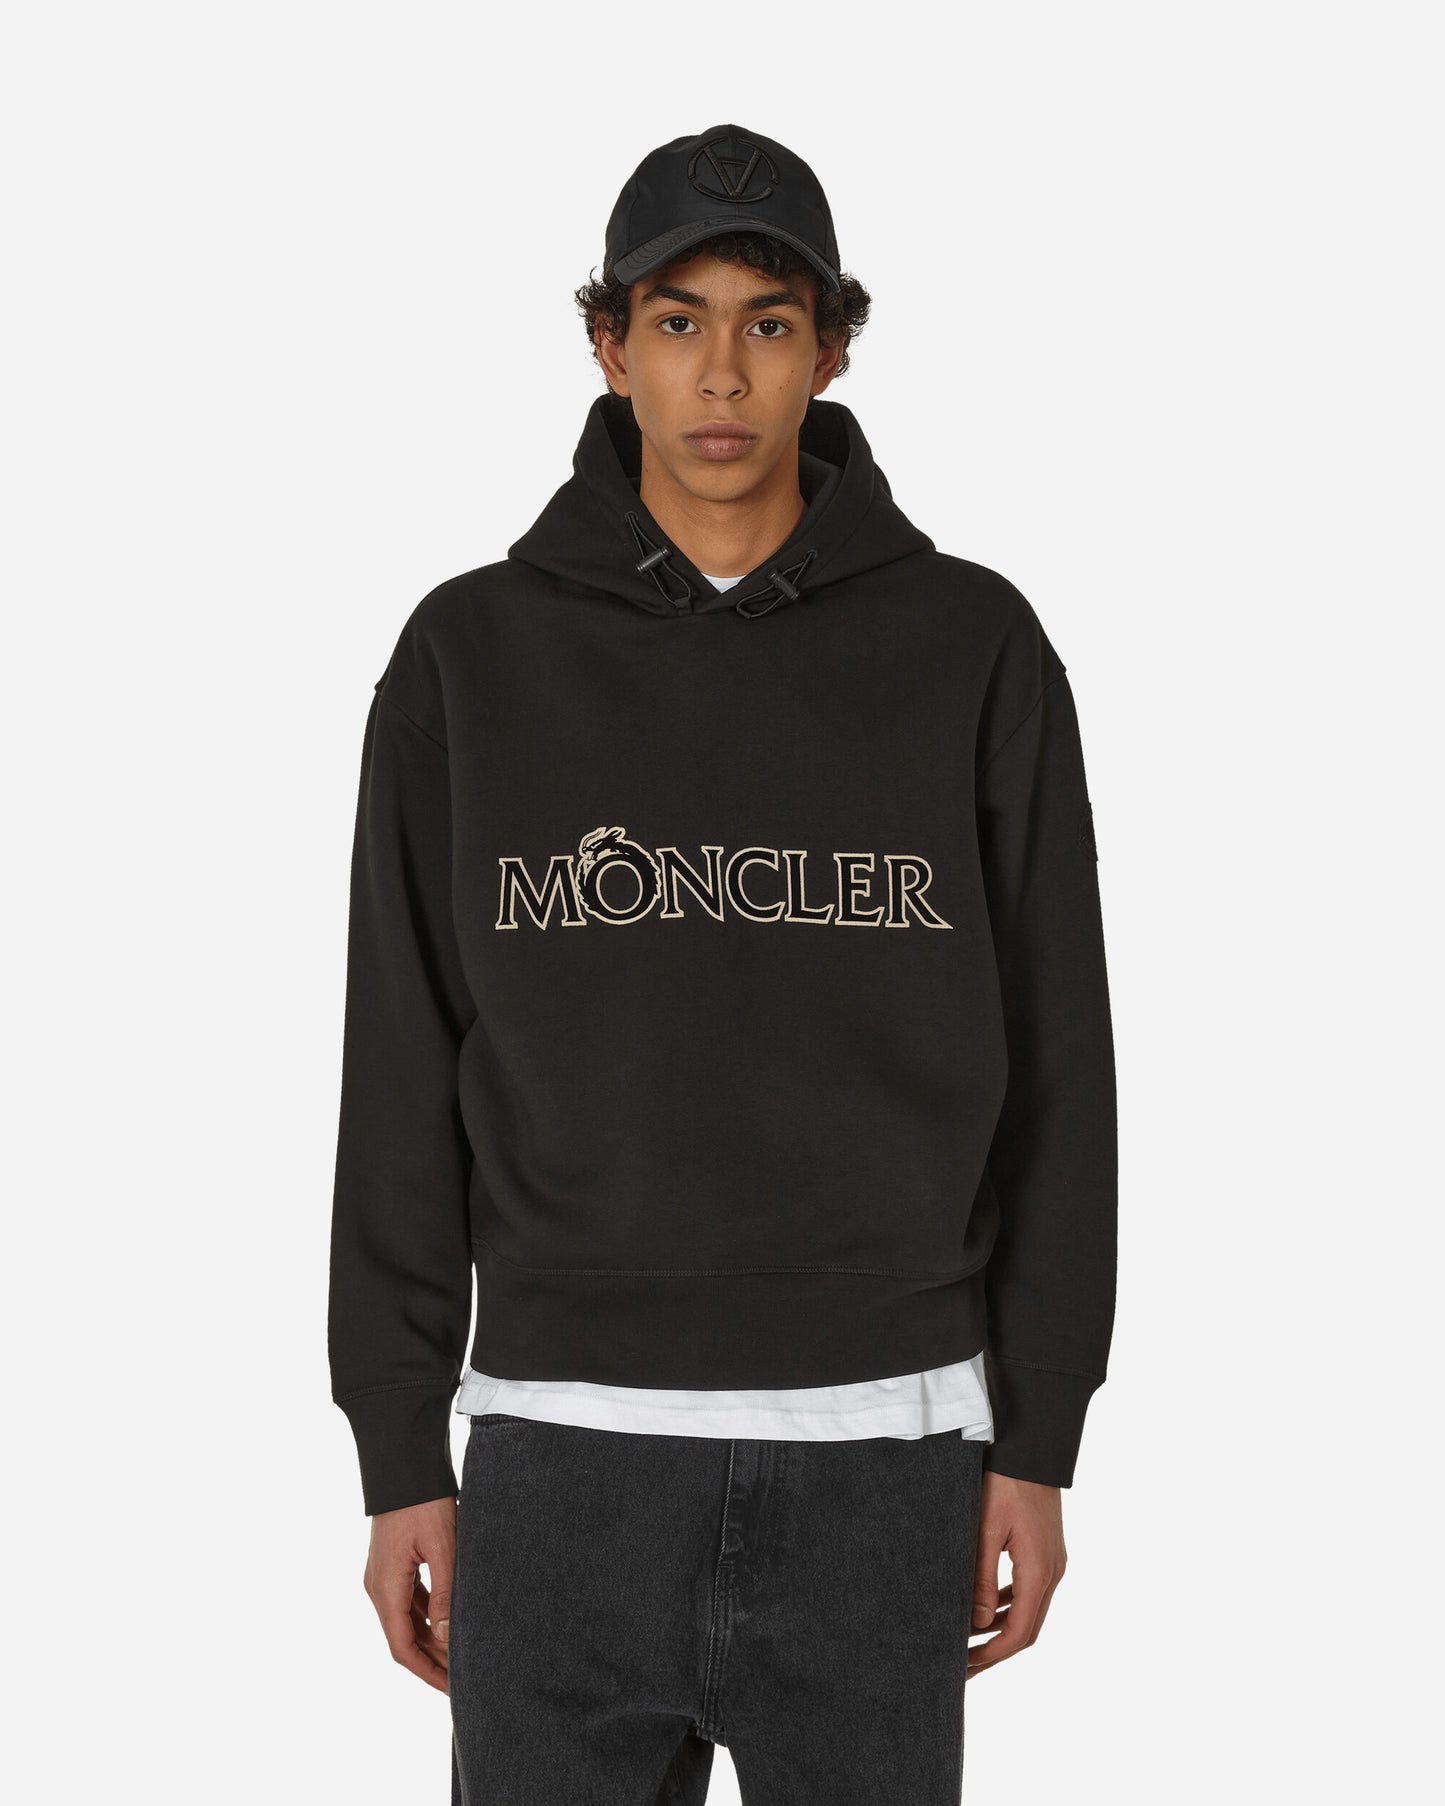 Moncler Hoodie Sweater Chinese New Year Black Sweatshirts Hoodies 8G00025899RB 999